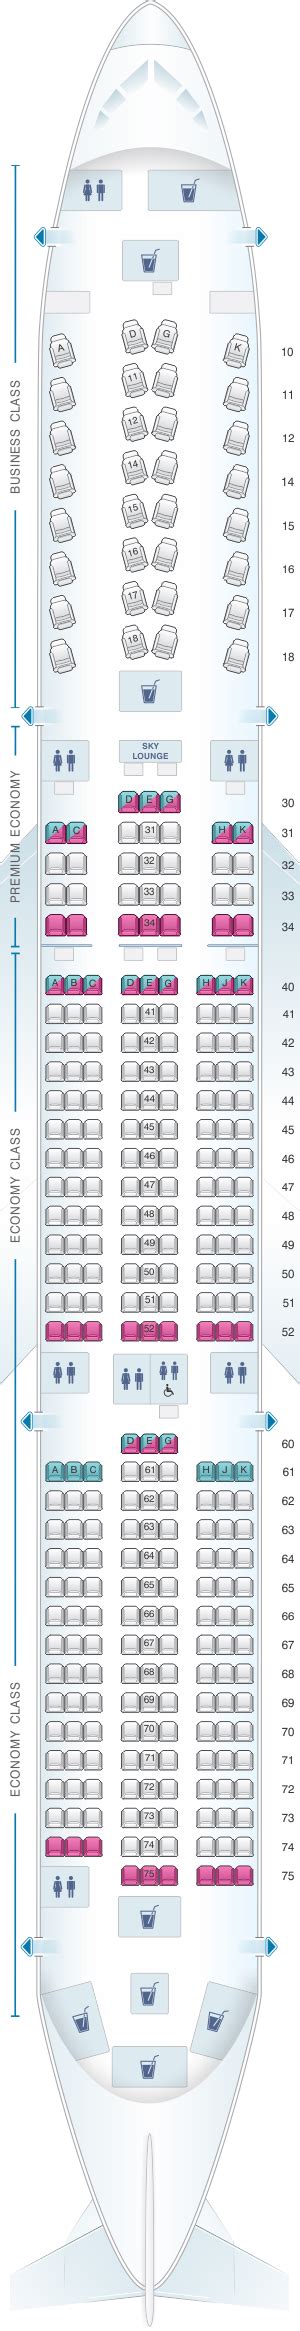 Lufthansa Seat Map A350 900 Elcho Table